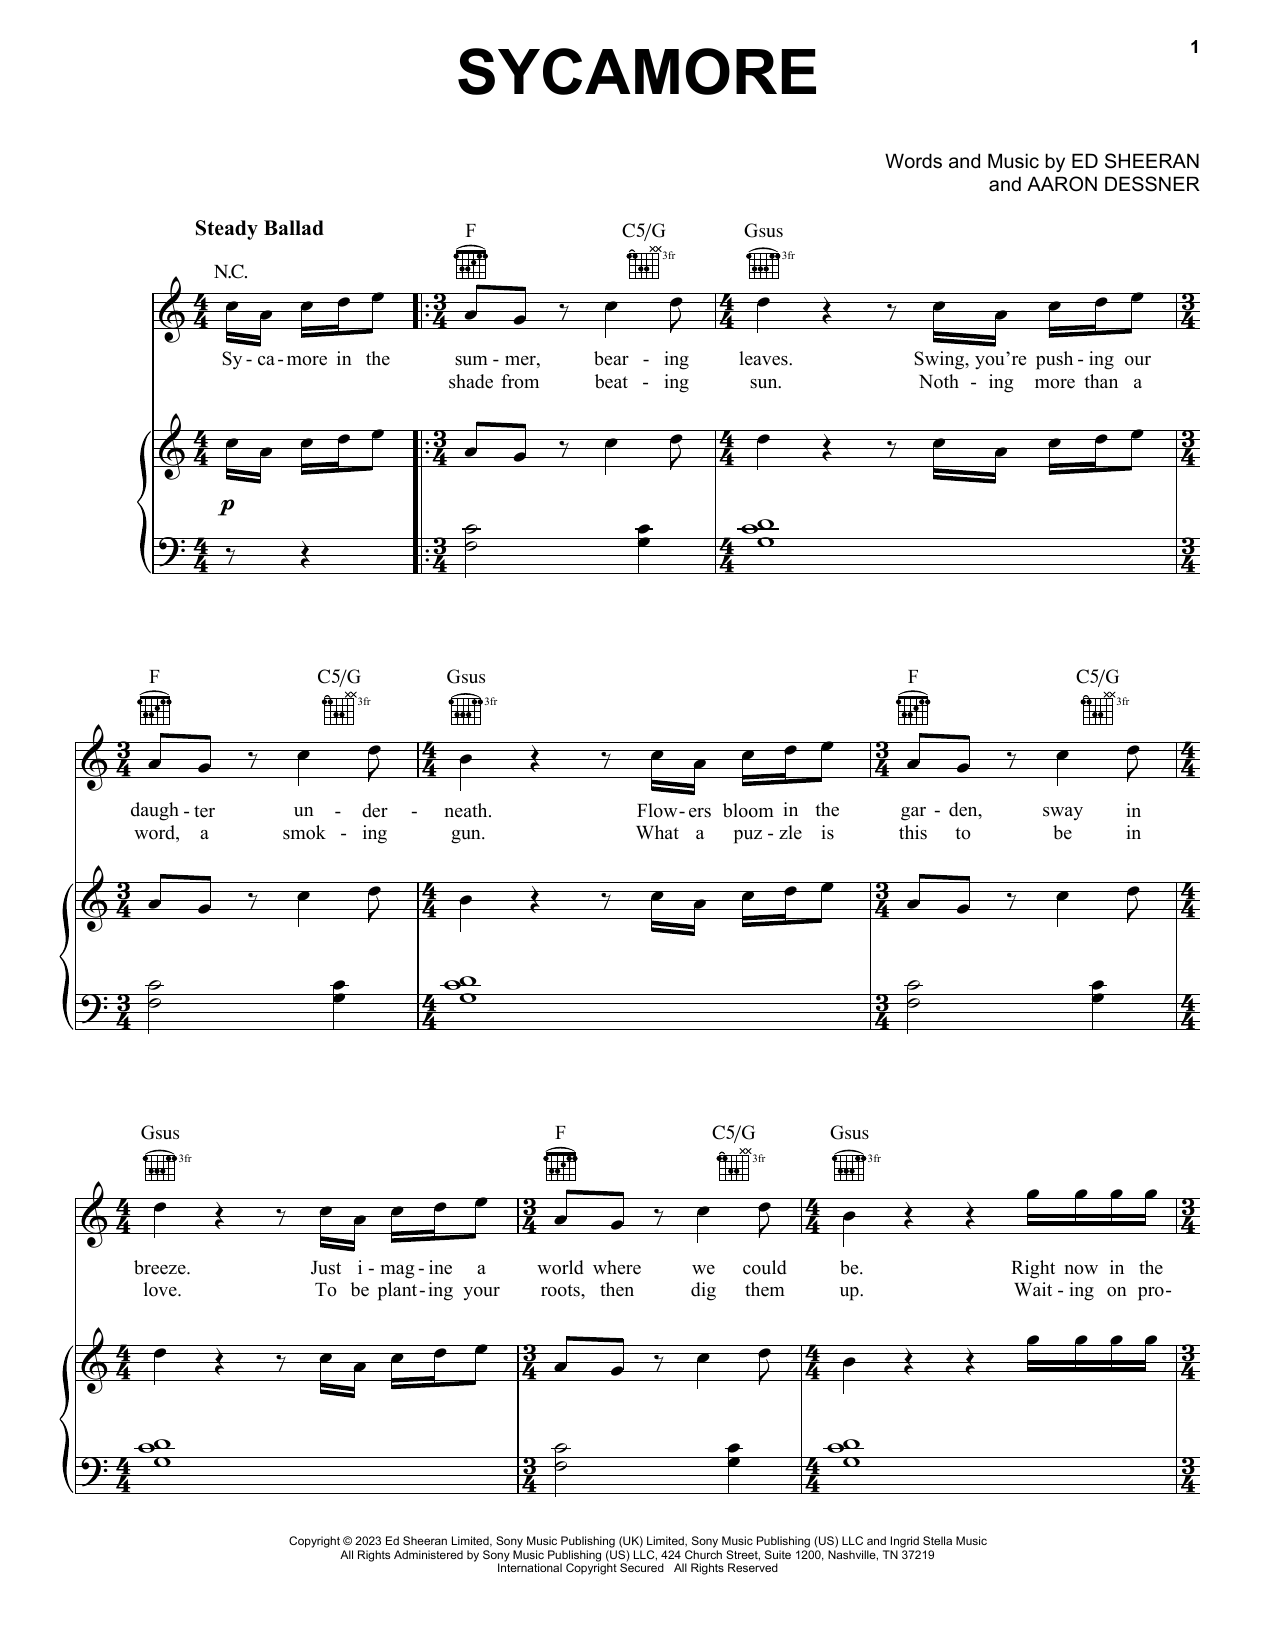 Ed Sheeran Sycamore Sheet Music Notes & Chords for Piano, Vocal & Guitar Chords (Right-Hand Melody) - Download or Print PDF